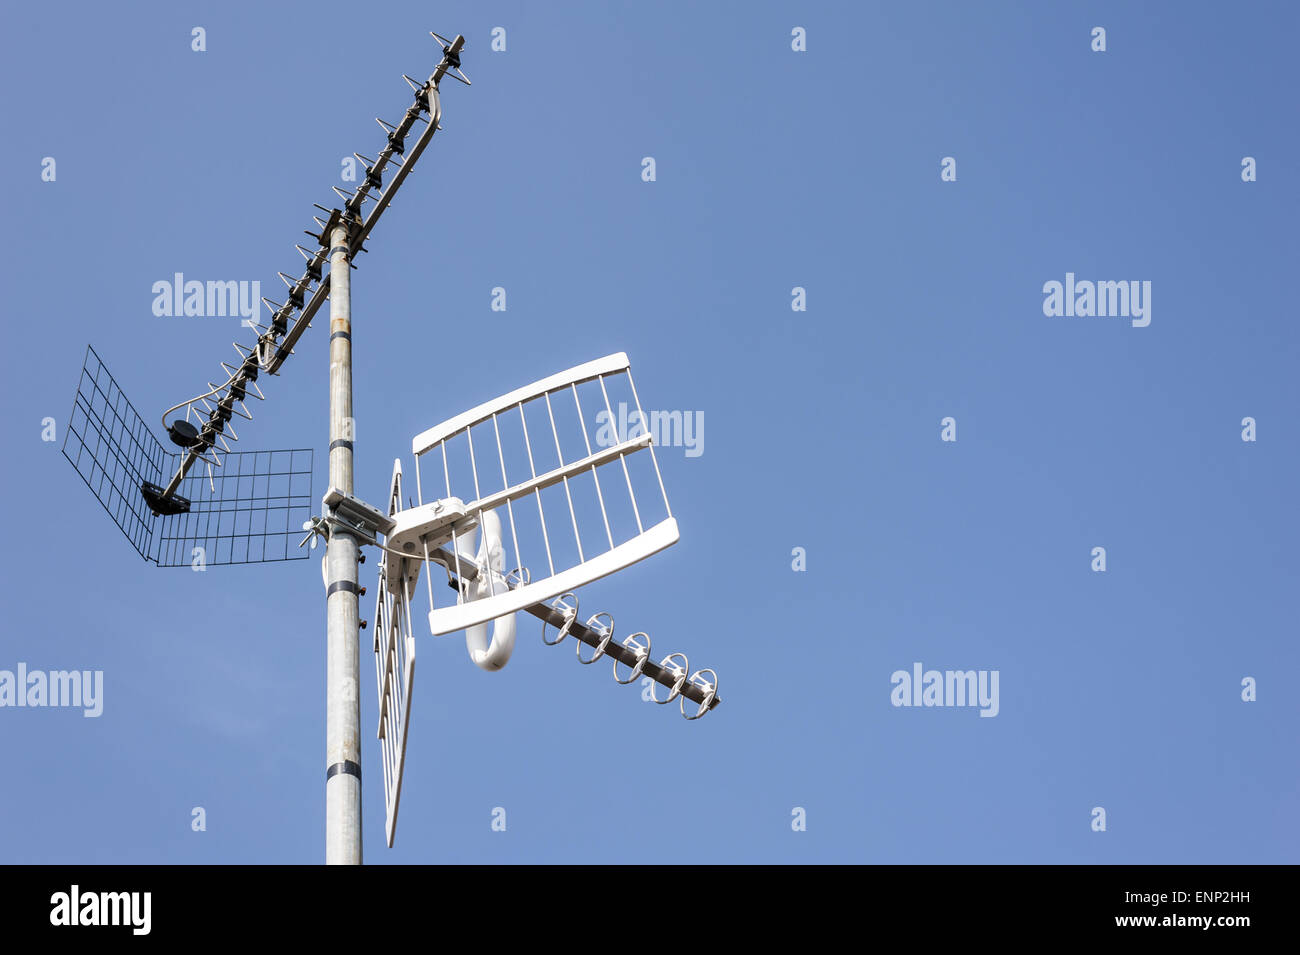 Antena tv inalámbrica fotografías e imágenes de alta resolución - Alamy